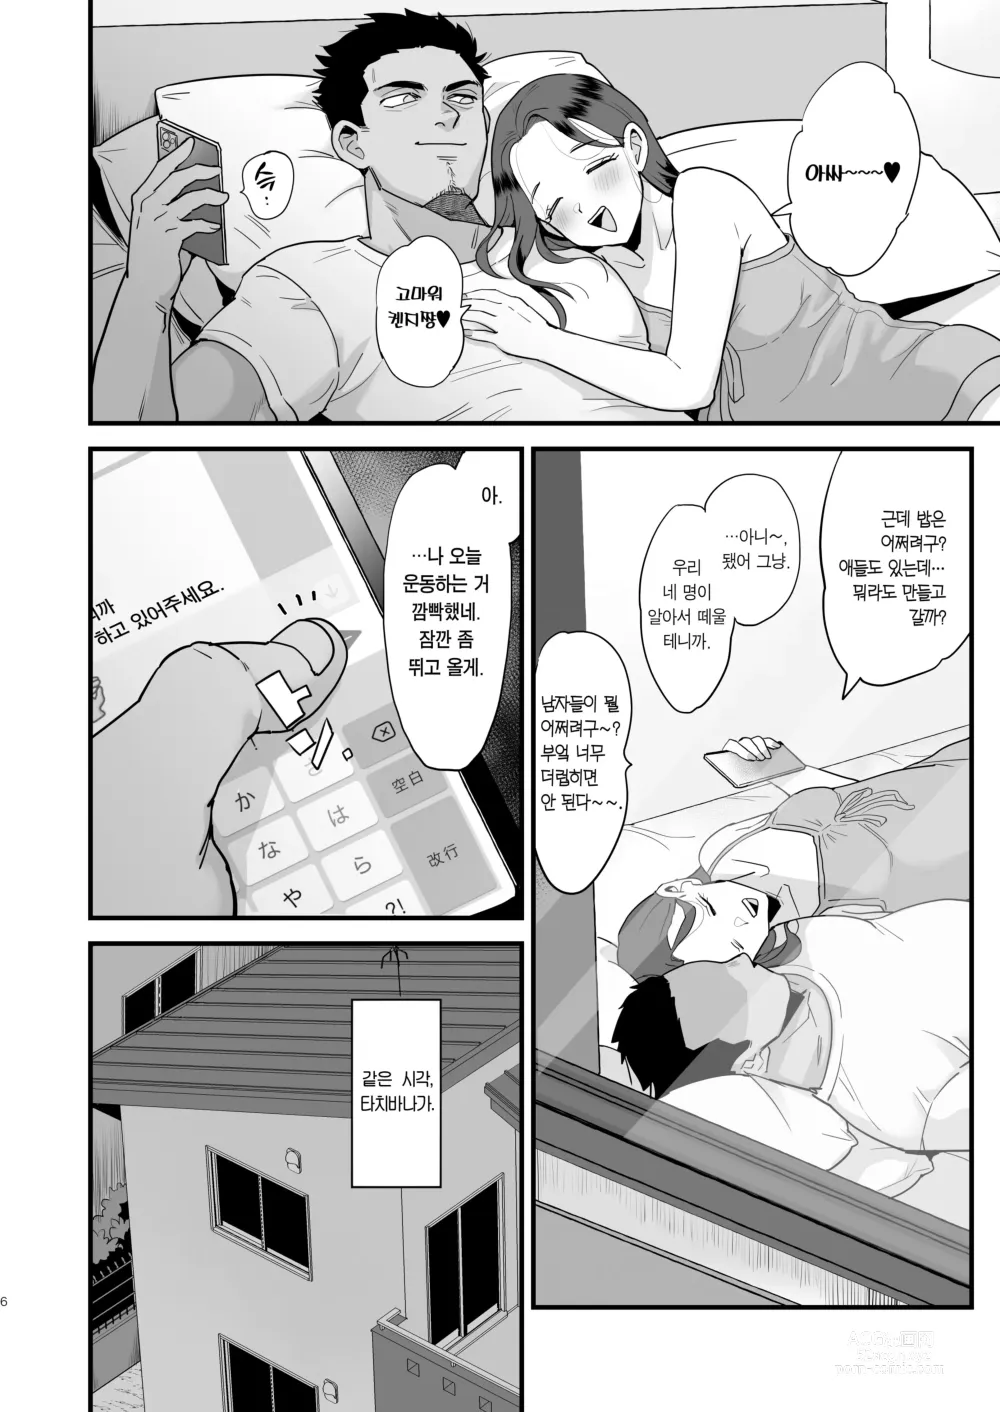 Page 5 of doujinshi 옛 동창의 섹프 격한 걸 좋아하는 료코 씨.